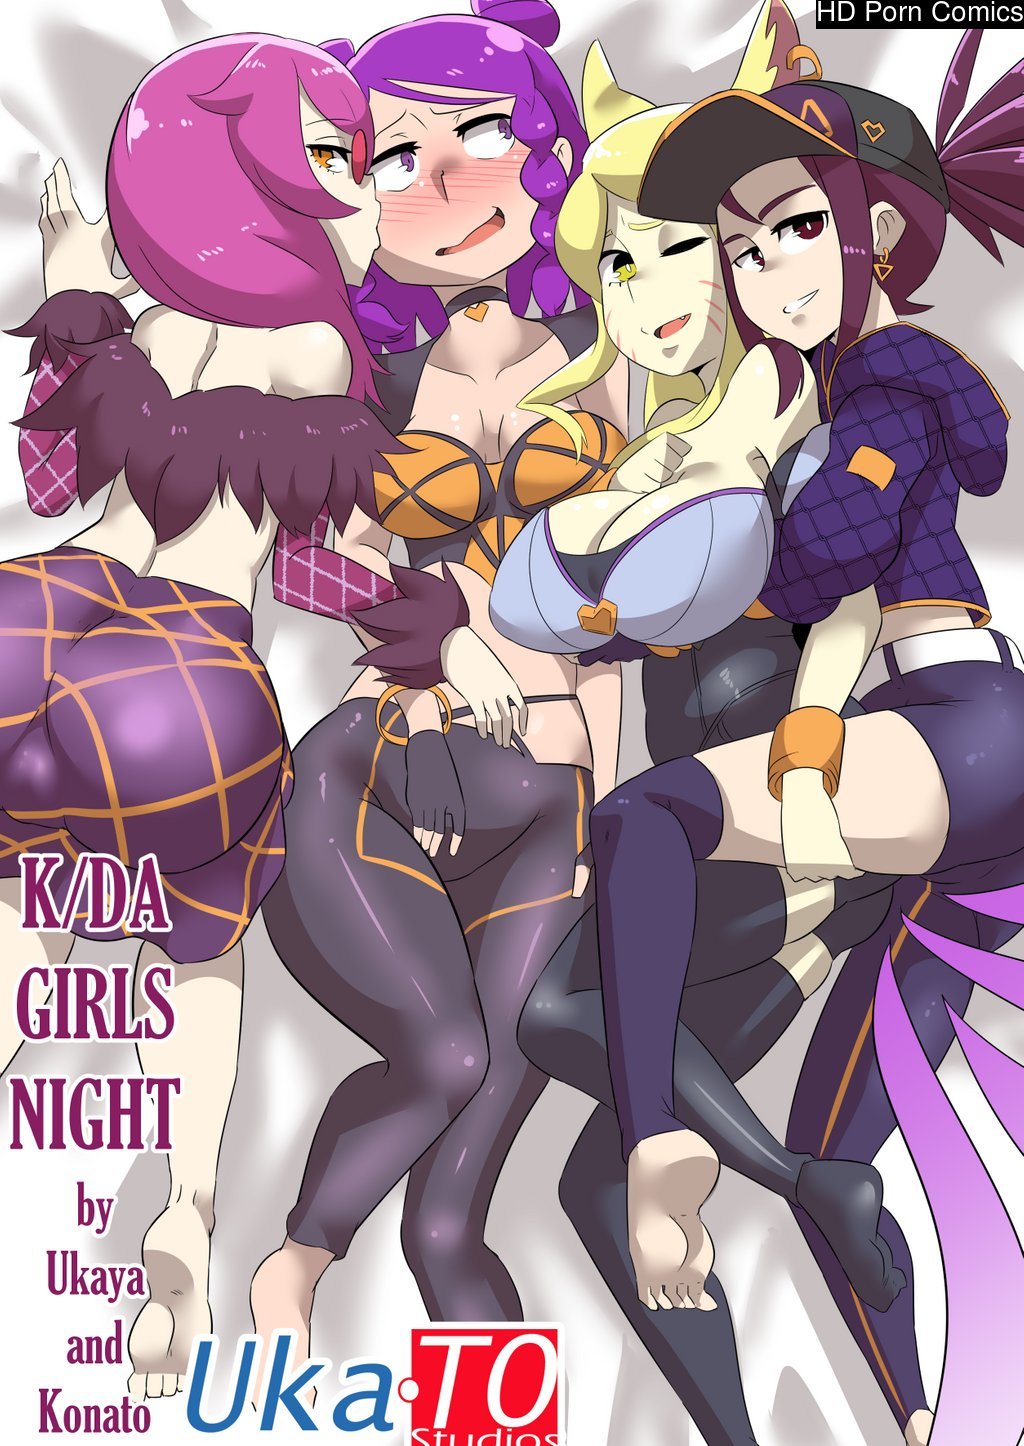 K/DA Girls Night comic porn | HD Porn Comics